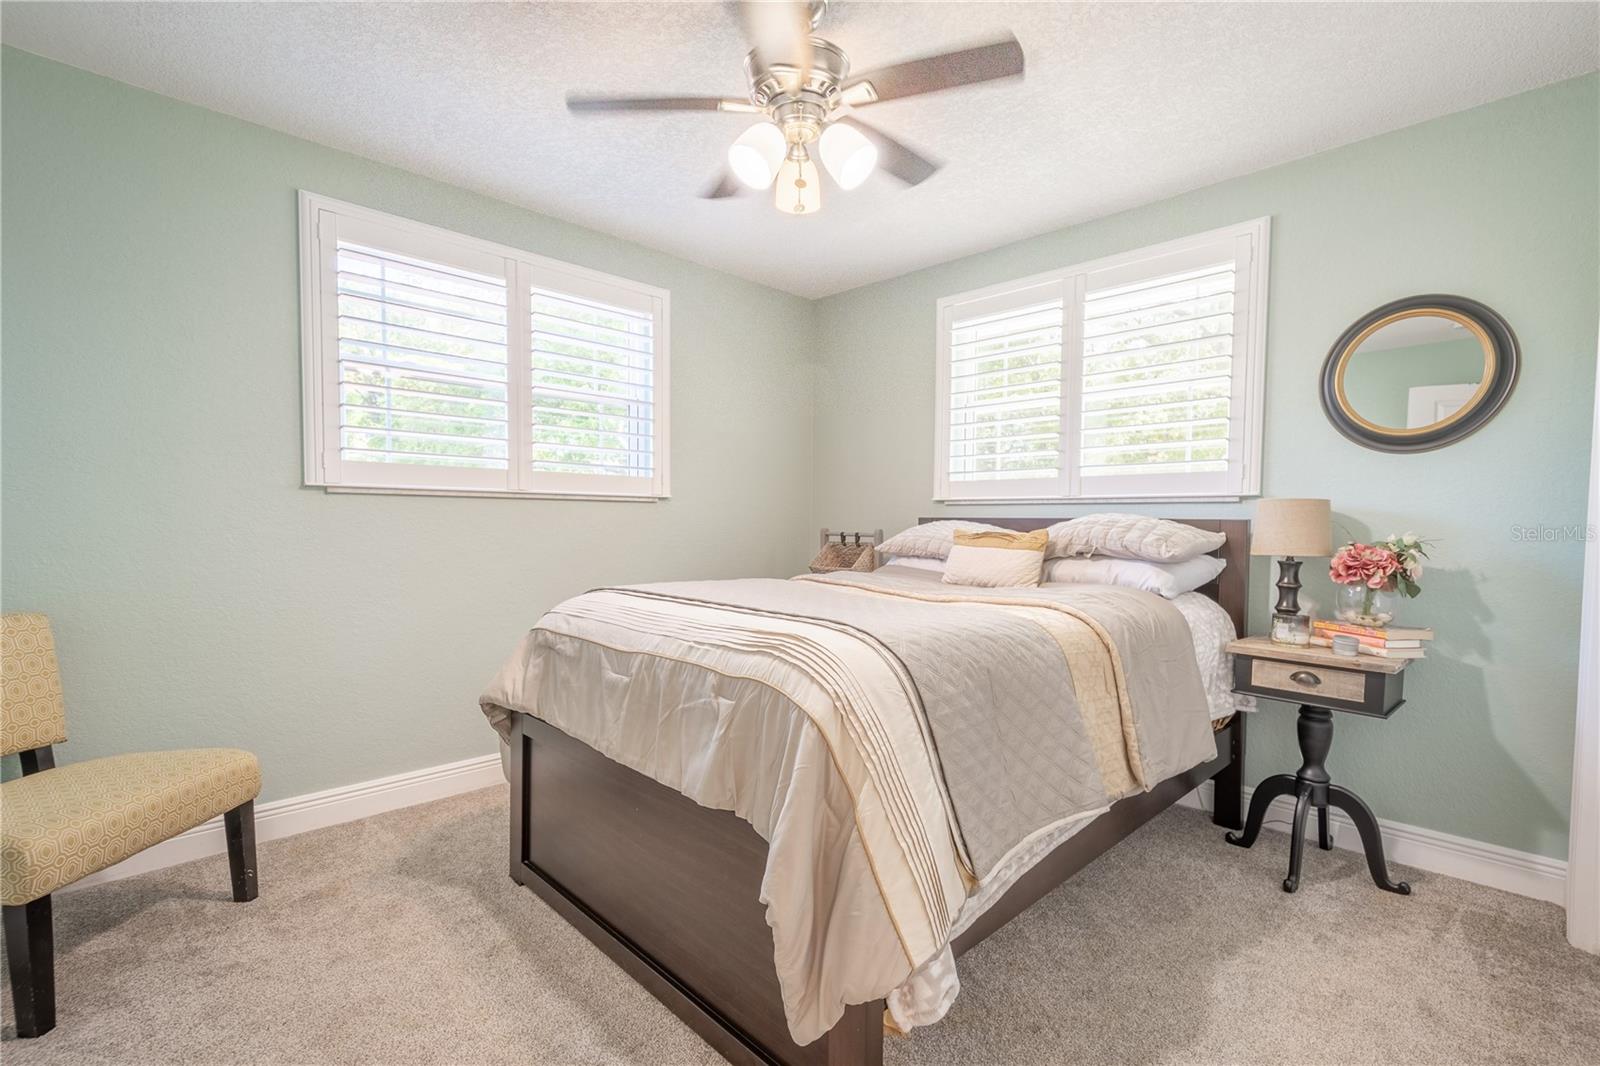 Bedroom 5 features neutral tones, plush carpet, plantation shutters, a ceiling fan and built-in closet.